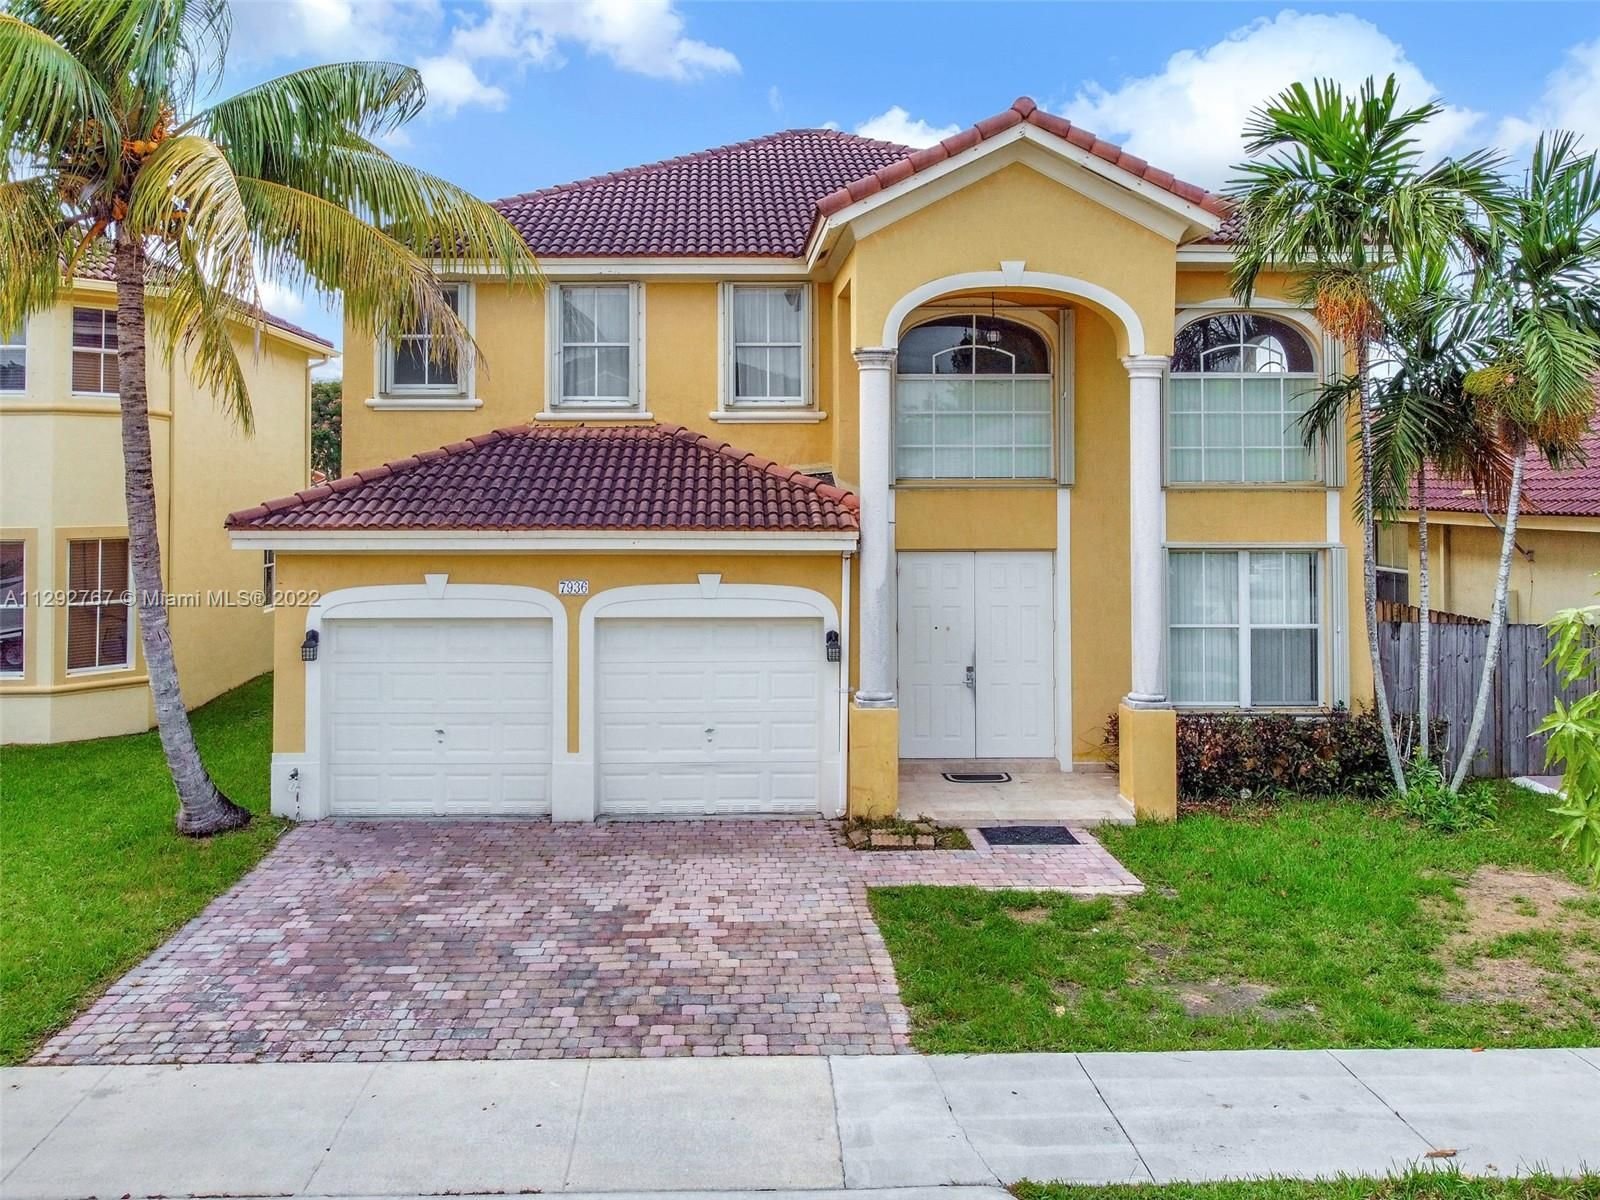 Real estate property located at 7936 164th Pl, Miami-Dade County, Miami, FL